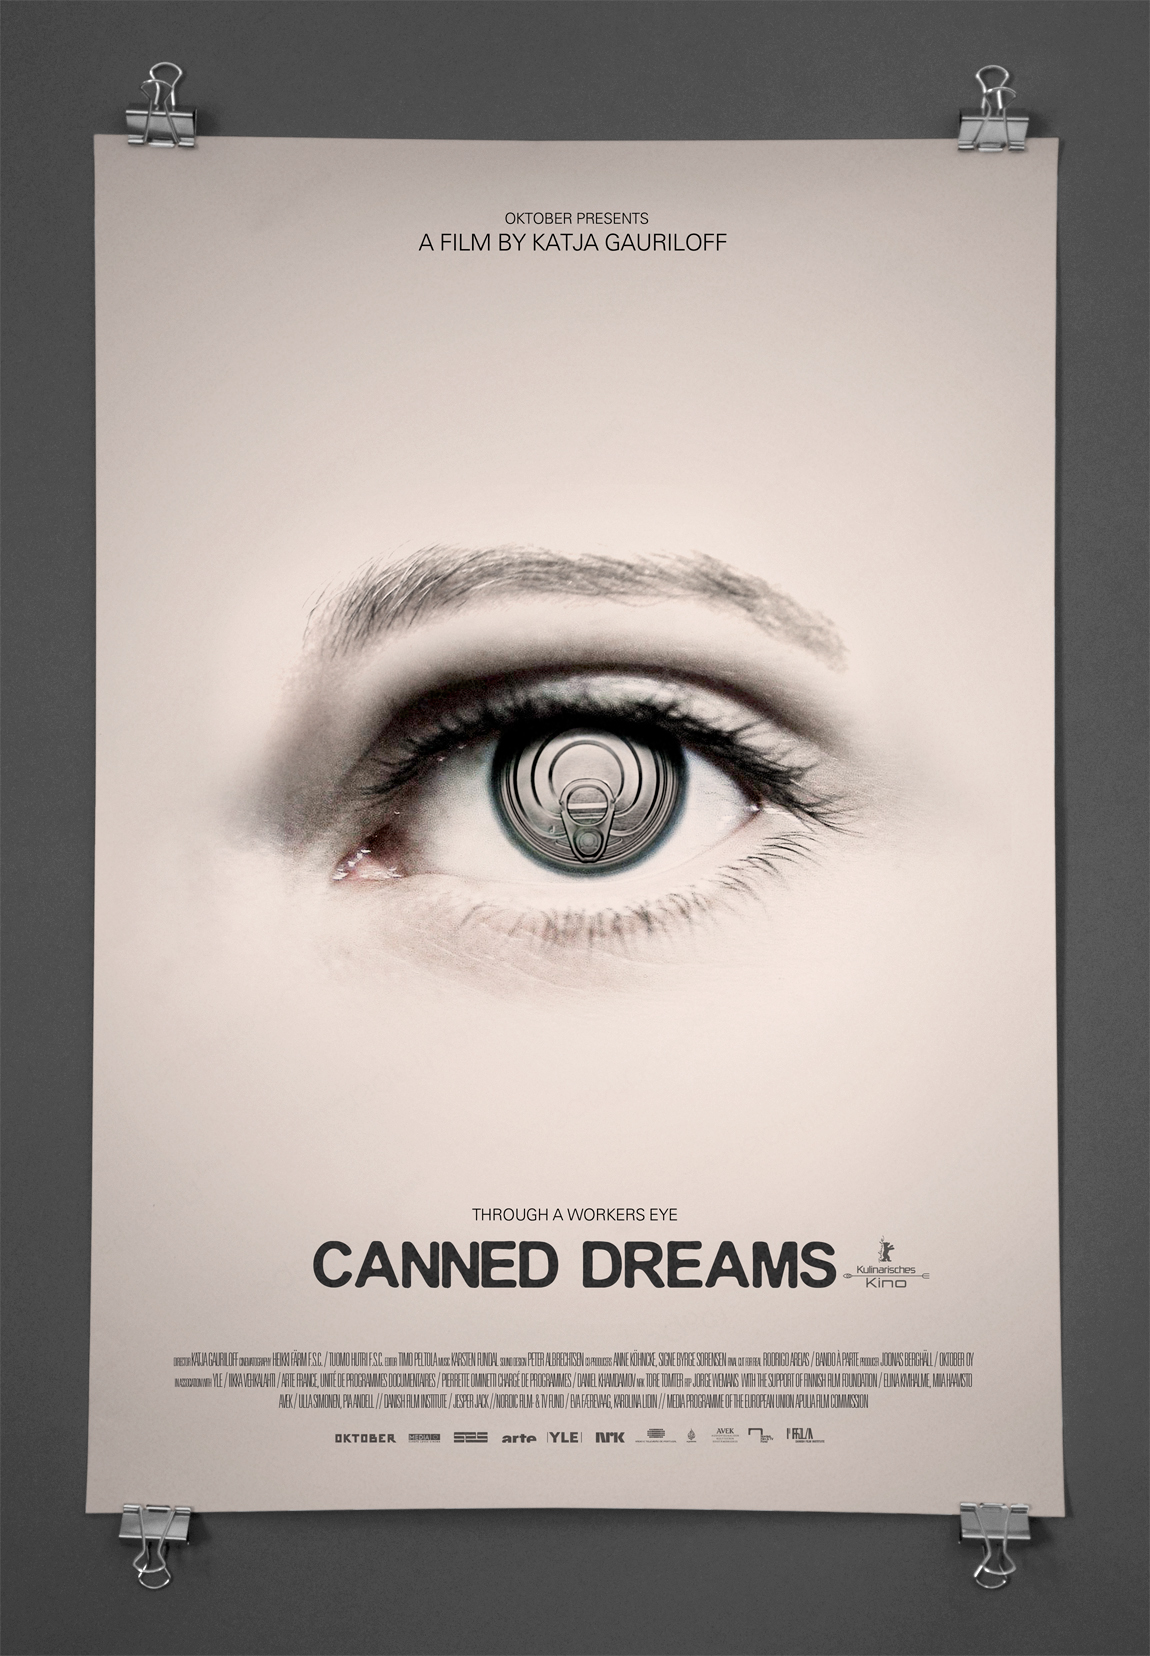 canned  dreams   movie  film  poster  design  festival  dokumentary  Cinema michael  gad